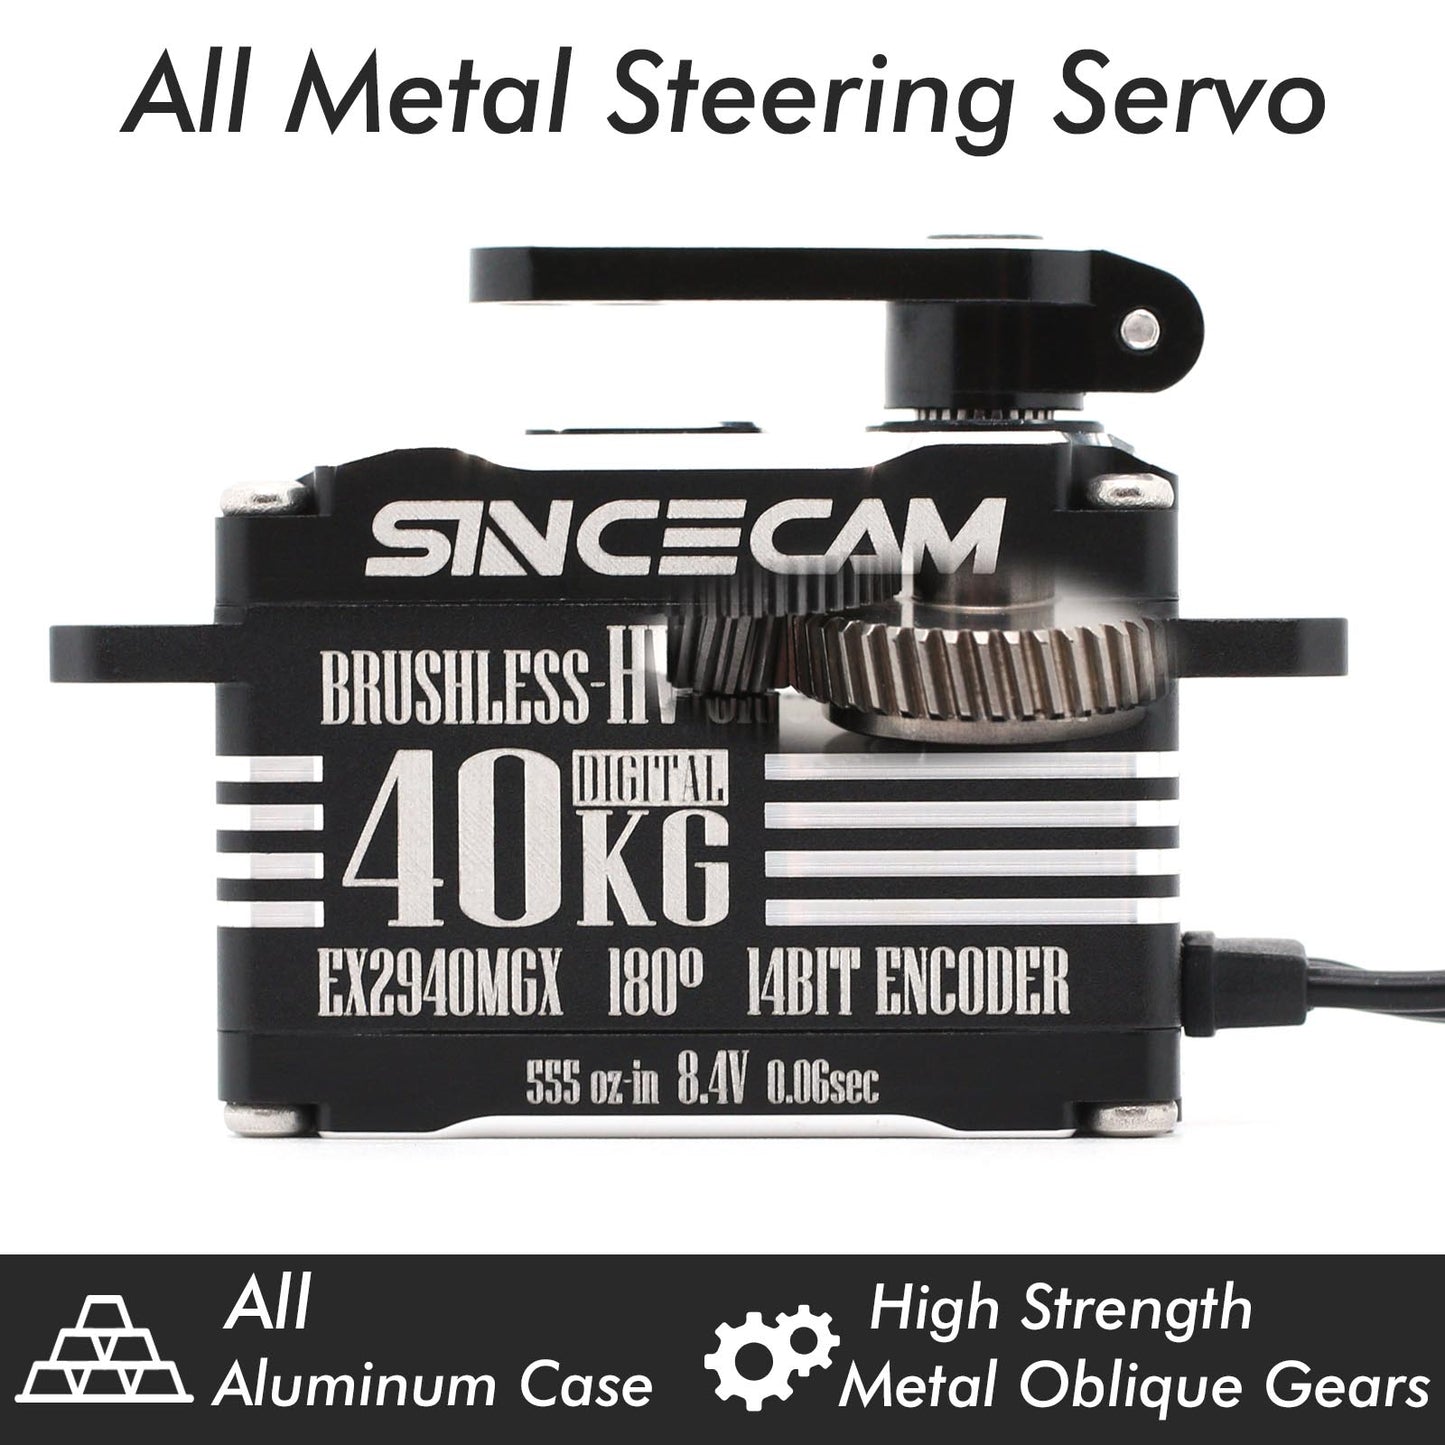 Sincecam 40kg Low Profile 8.4v Waterproof Brushless Steering Servos (Black)